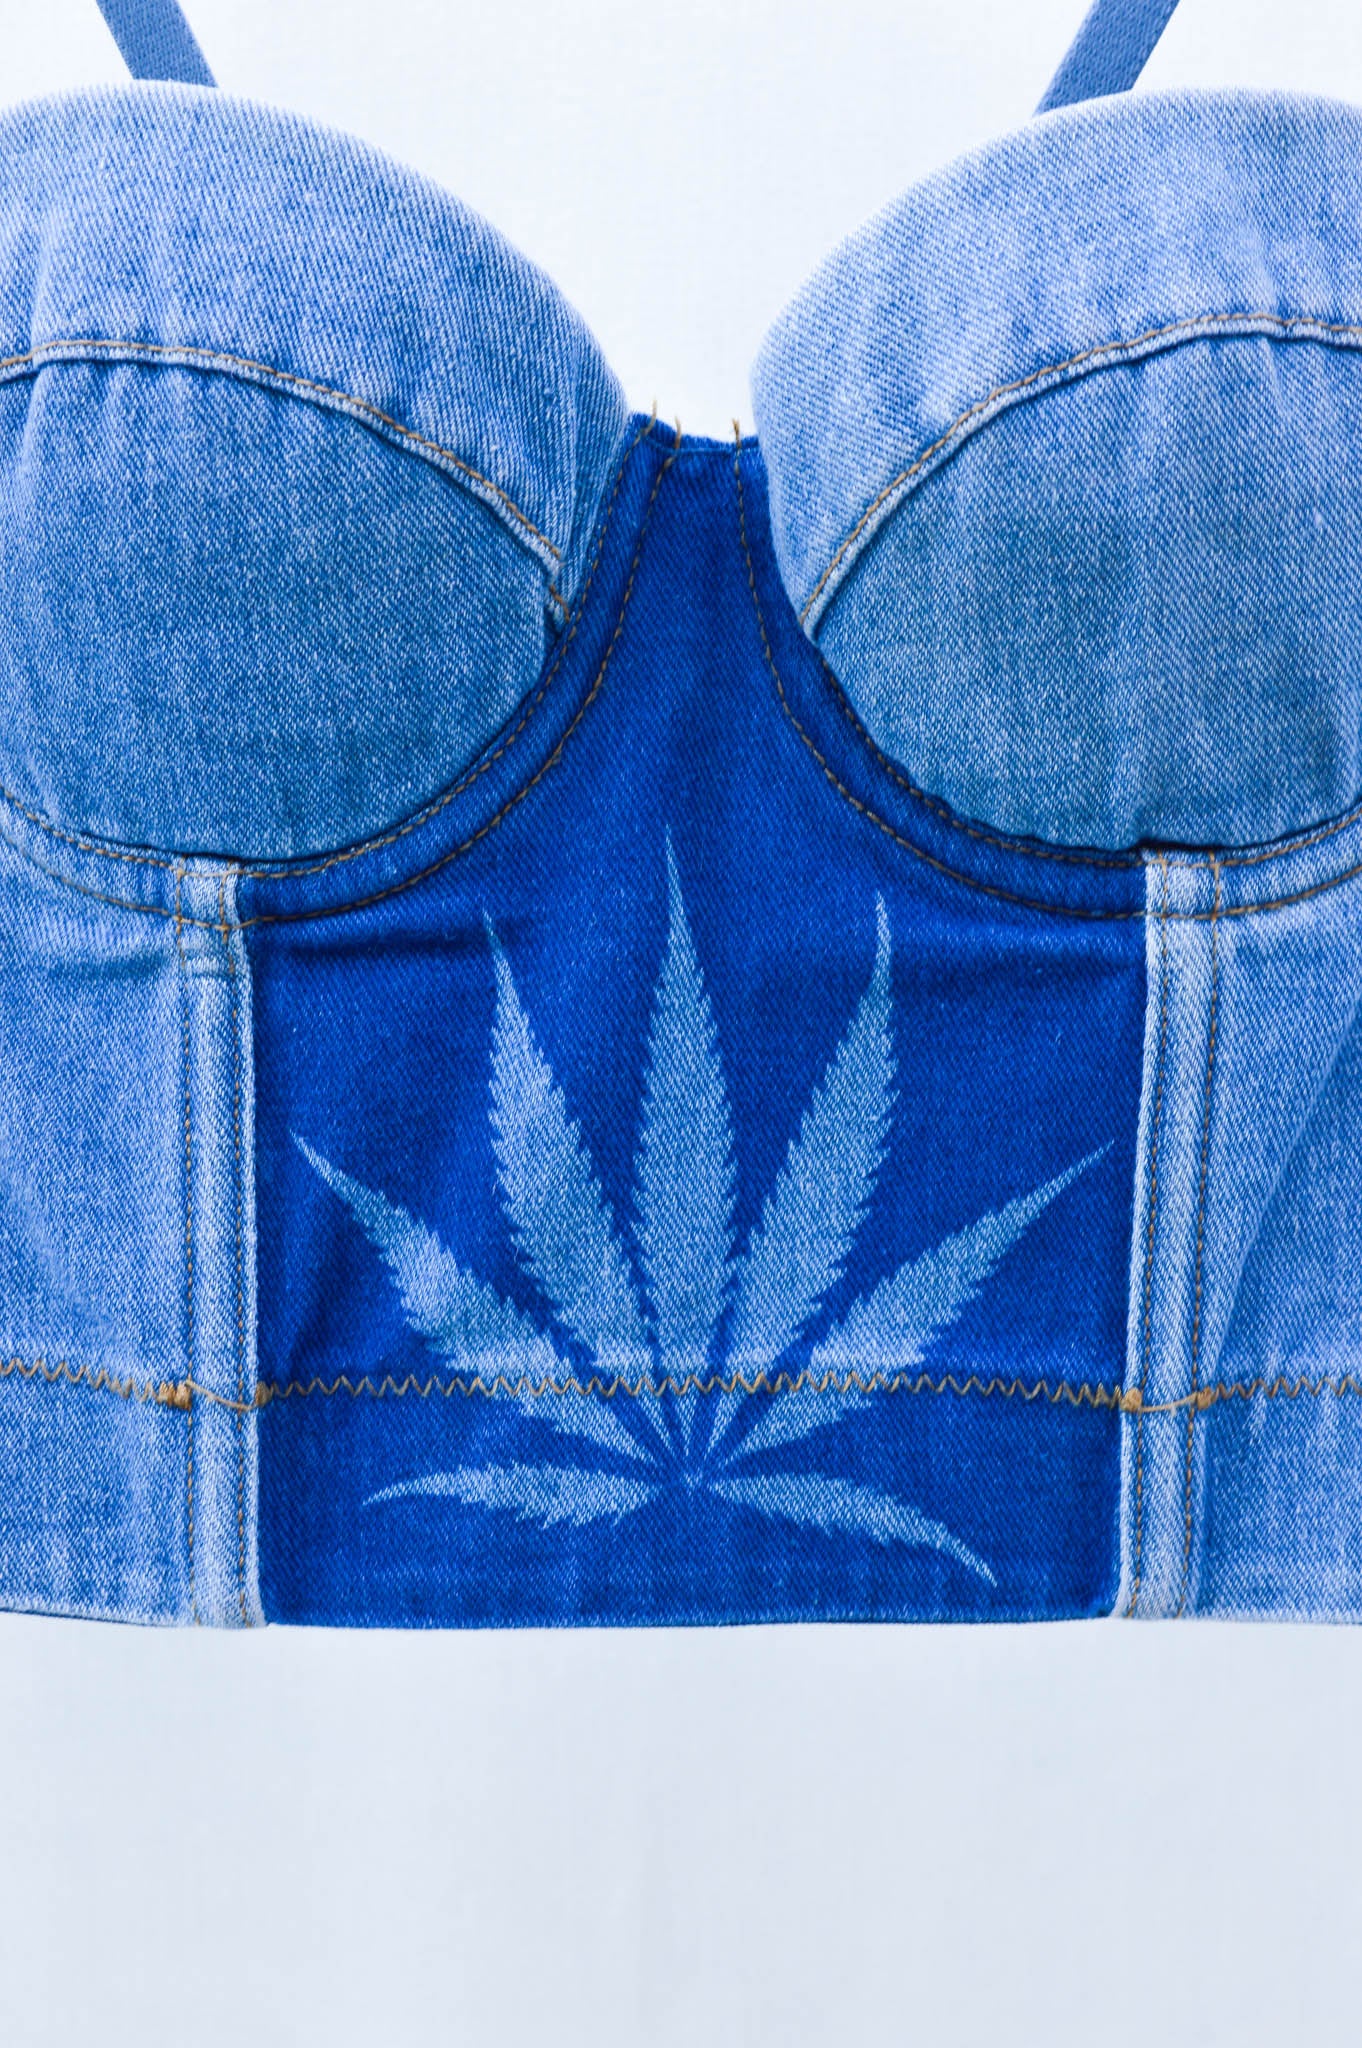 Women's Small Denim Cannabis Corset Top